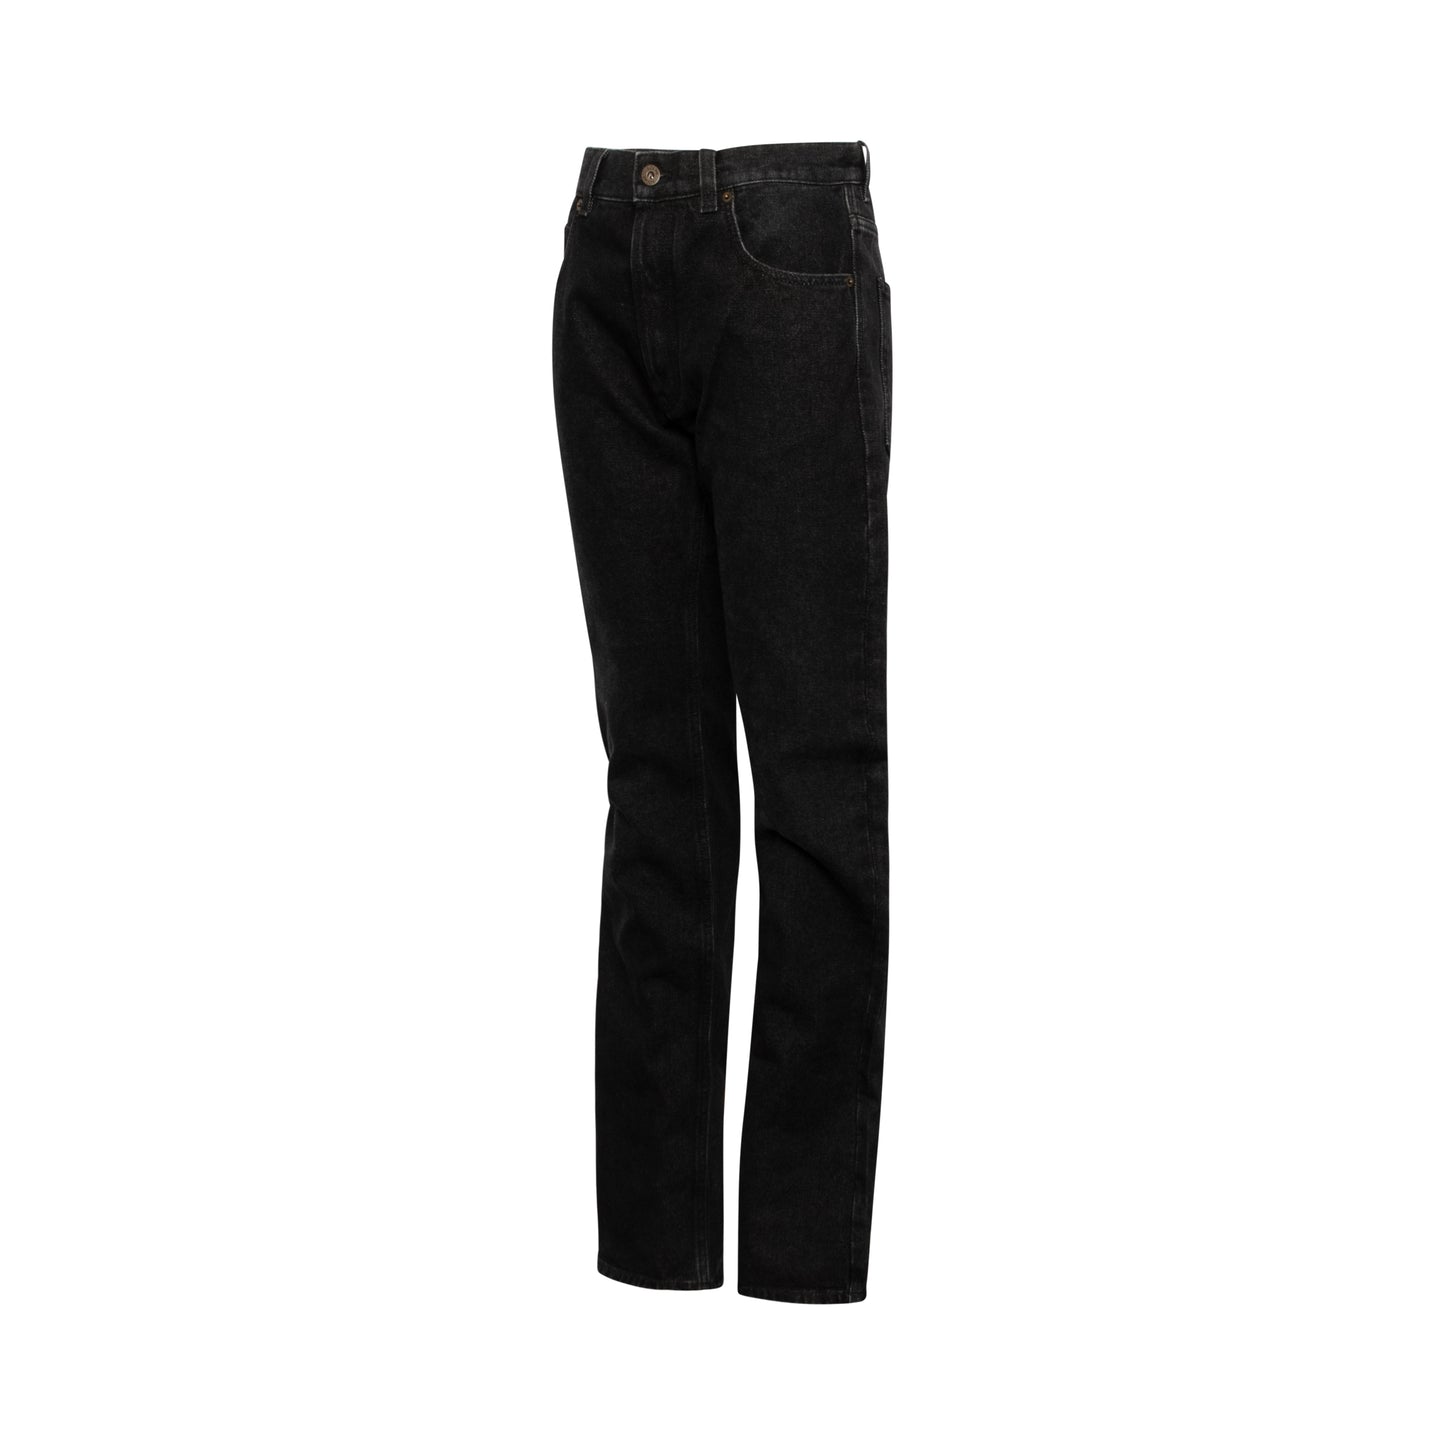 5 Pockets Jeans in Black